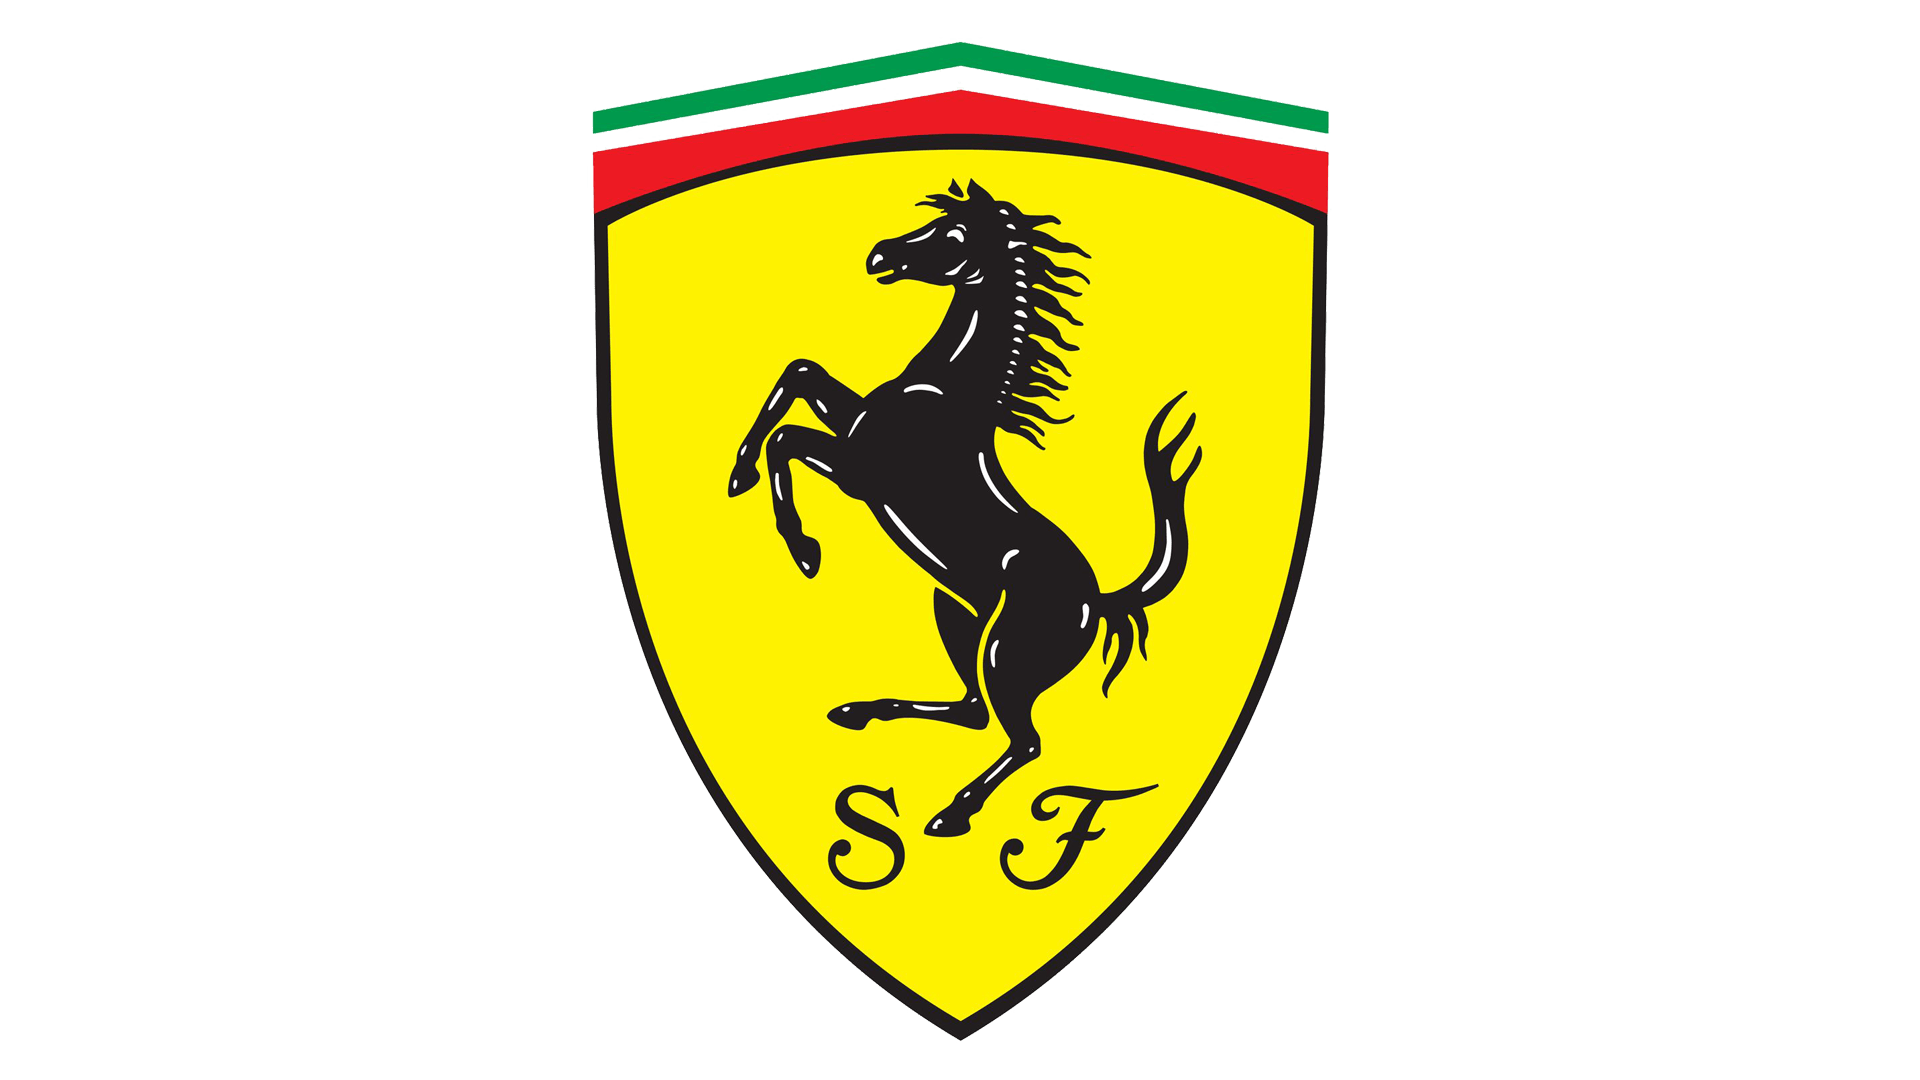 Italian Sports Car Logo - Italian Car Brands, Companies & Manufacturer Logos with Names